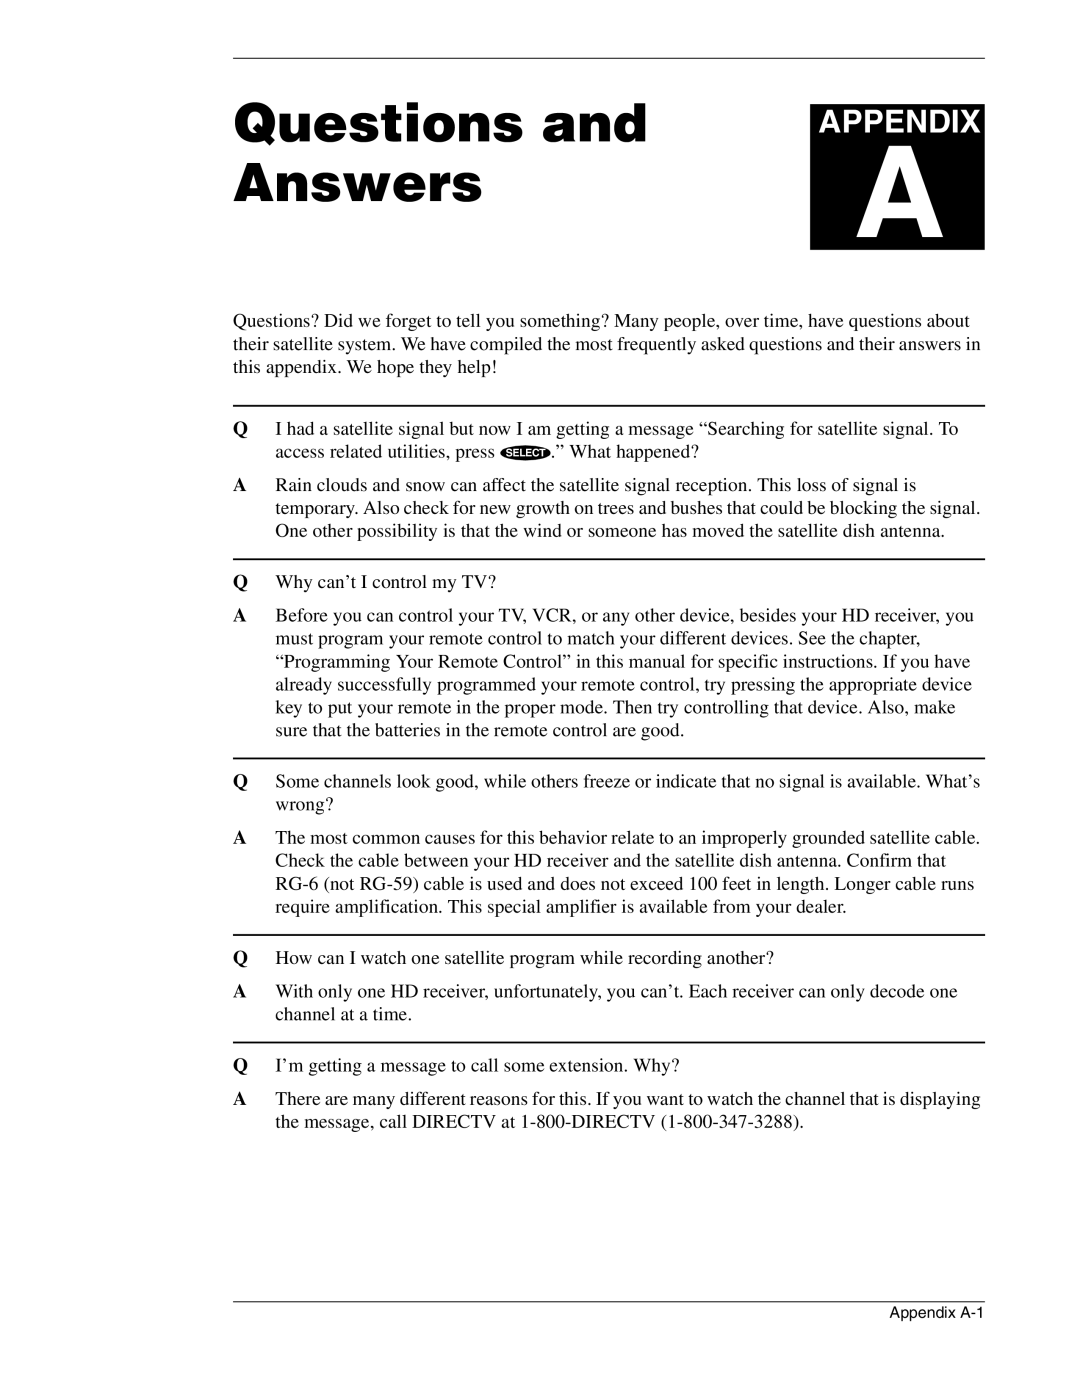 DirecTV HIRD-E86 manual Questions and, Answers, Appendix 